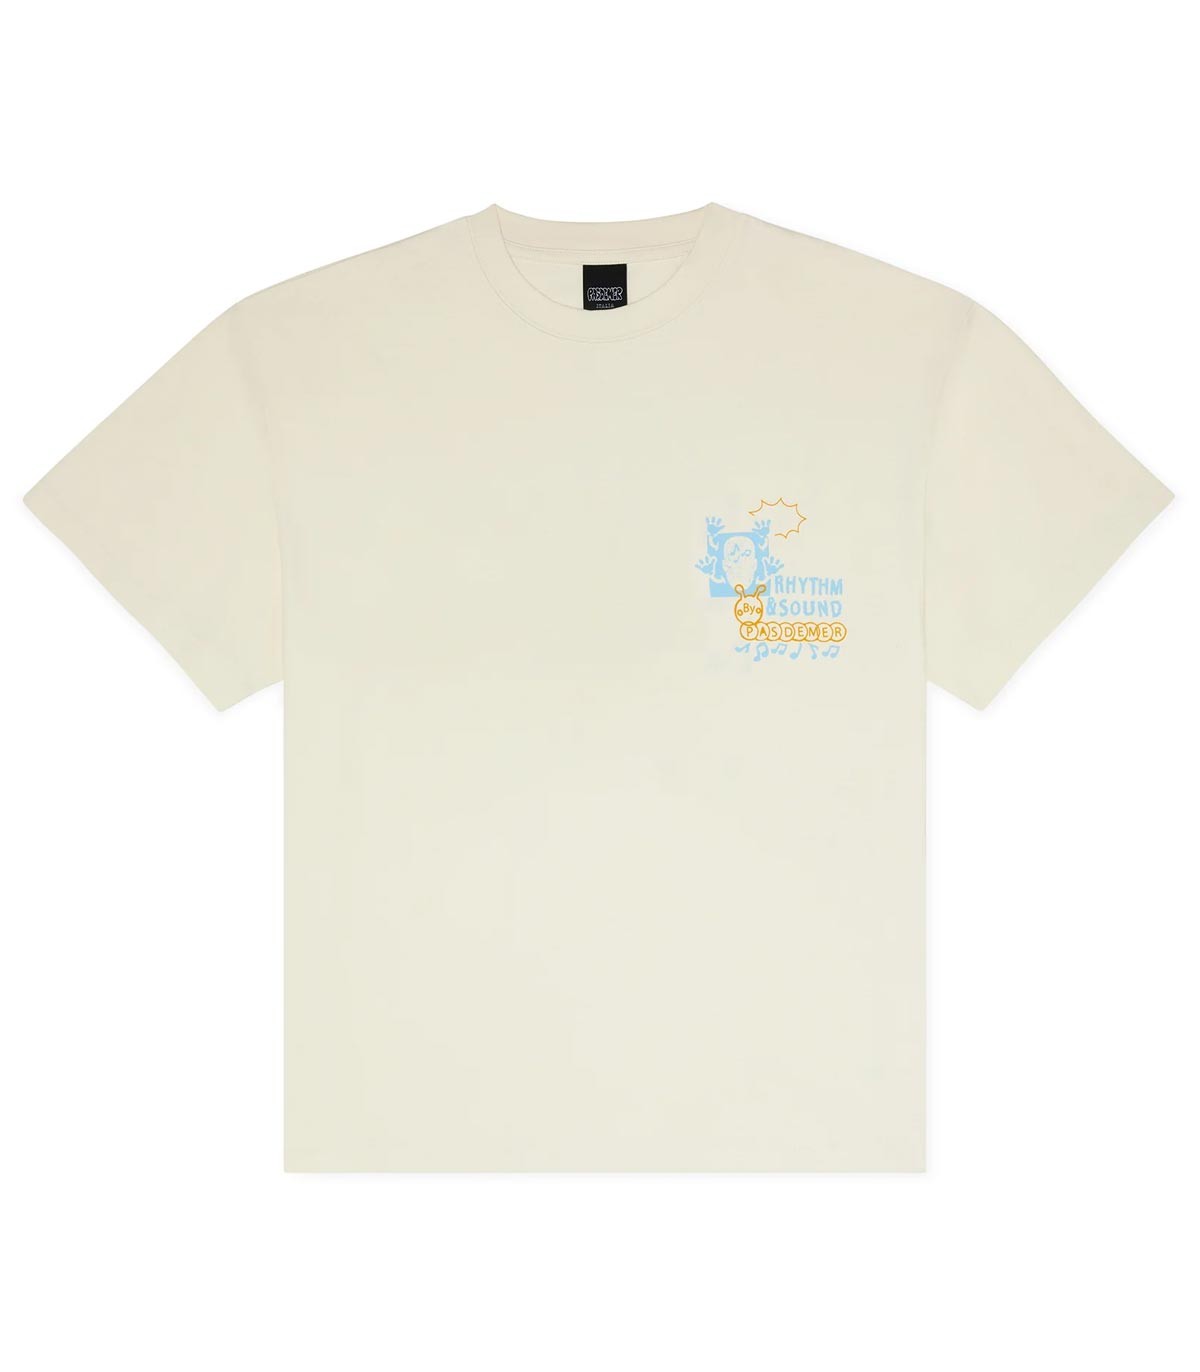 PASDEMER - Camiseta Bongos - Beige